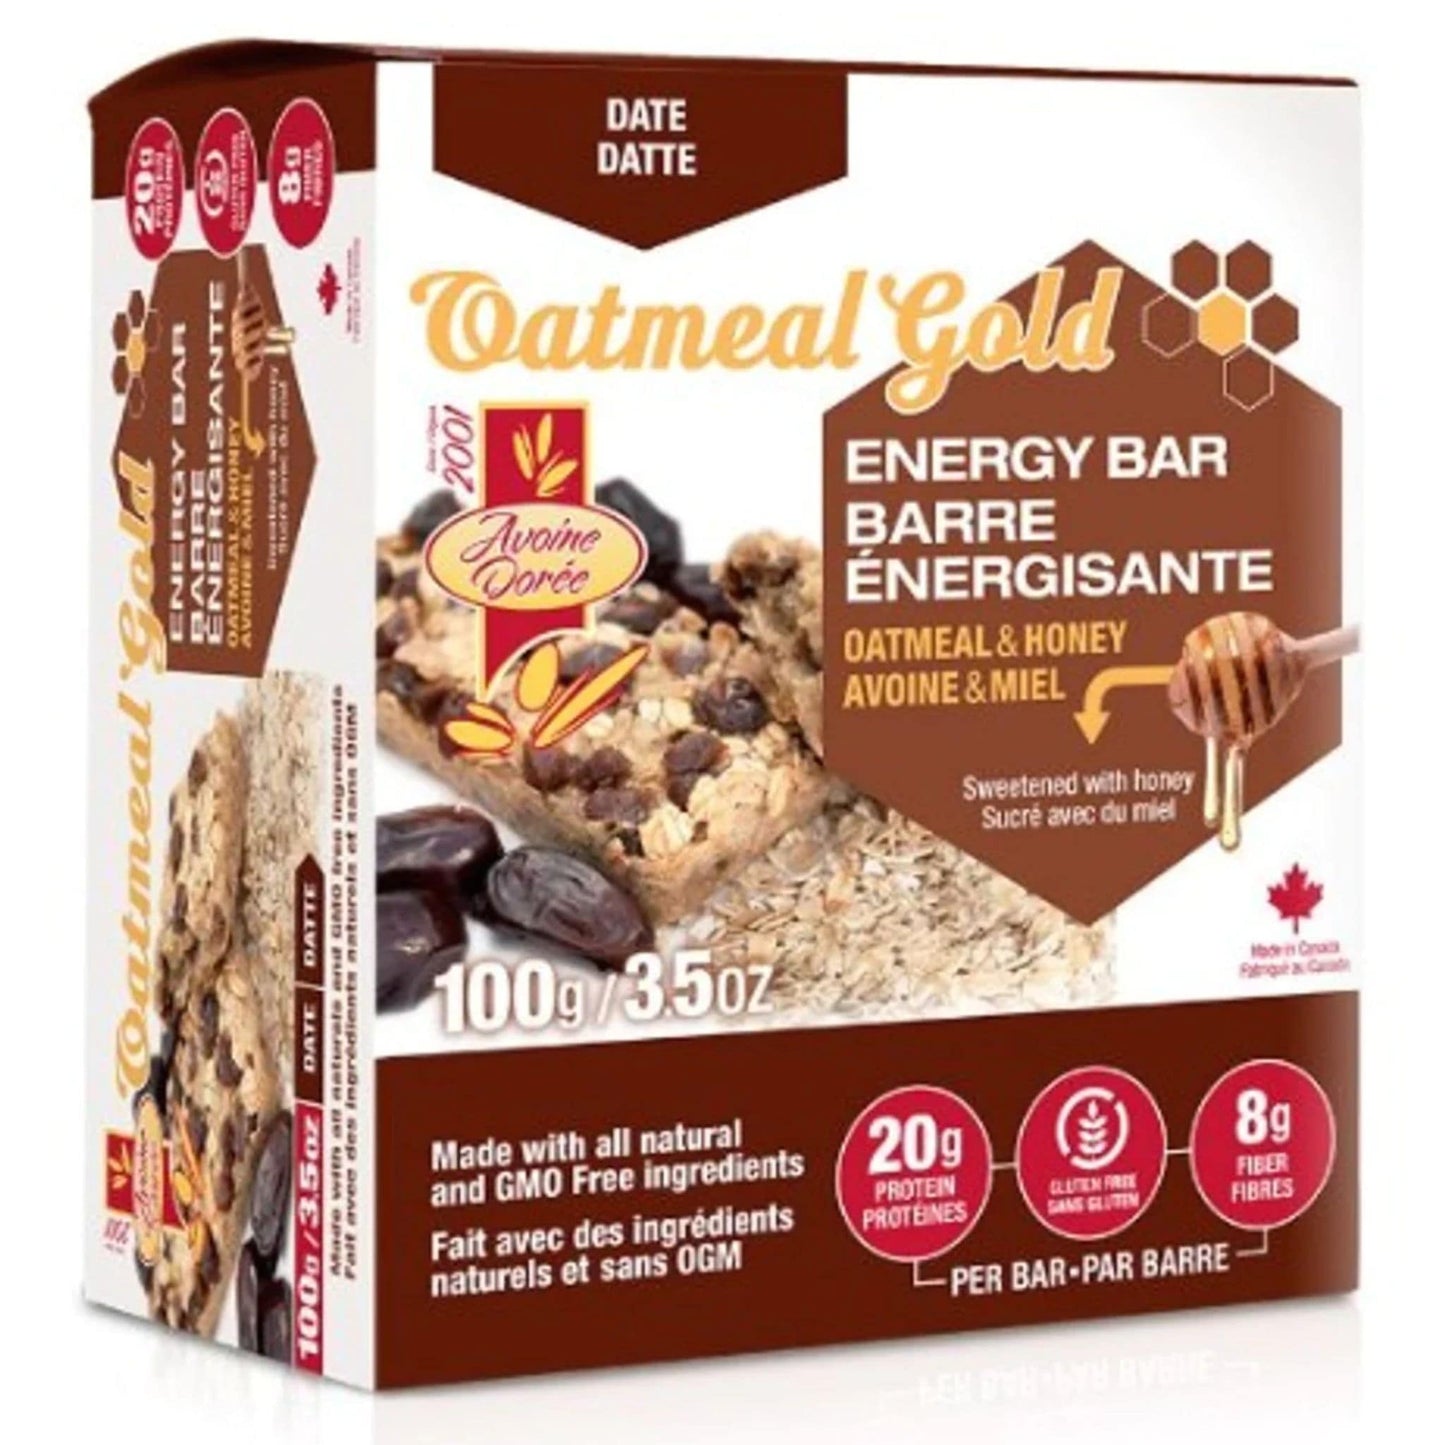 12 x 100g Date | Oatmeal Gold All Natural Energy Bar